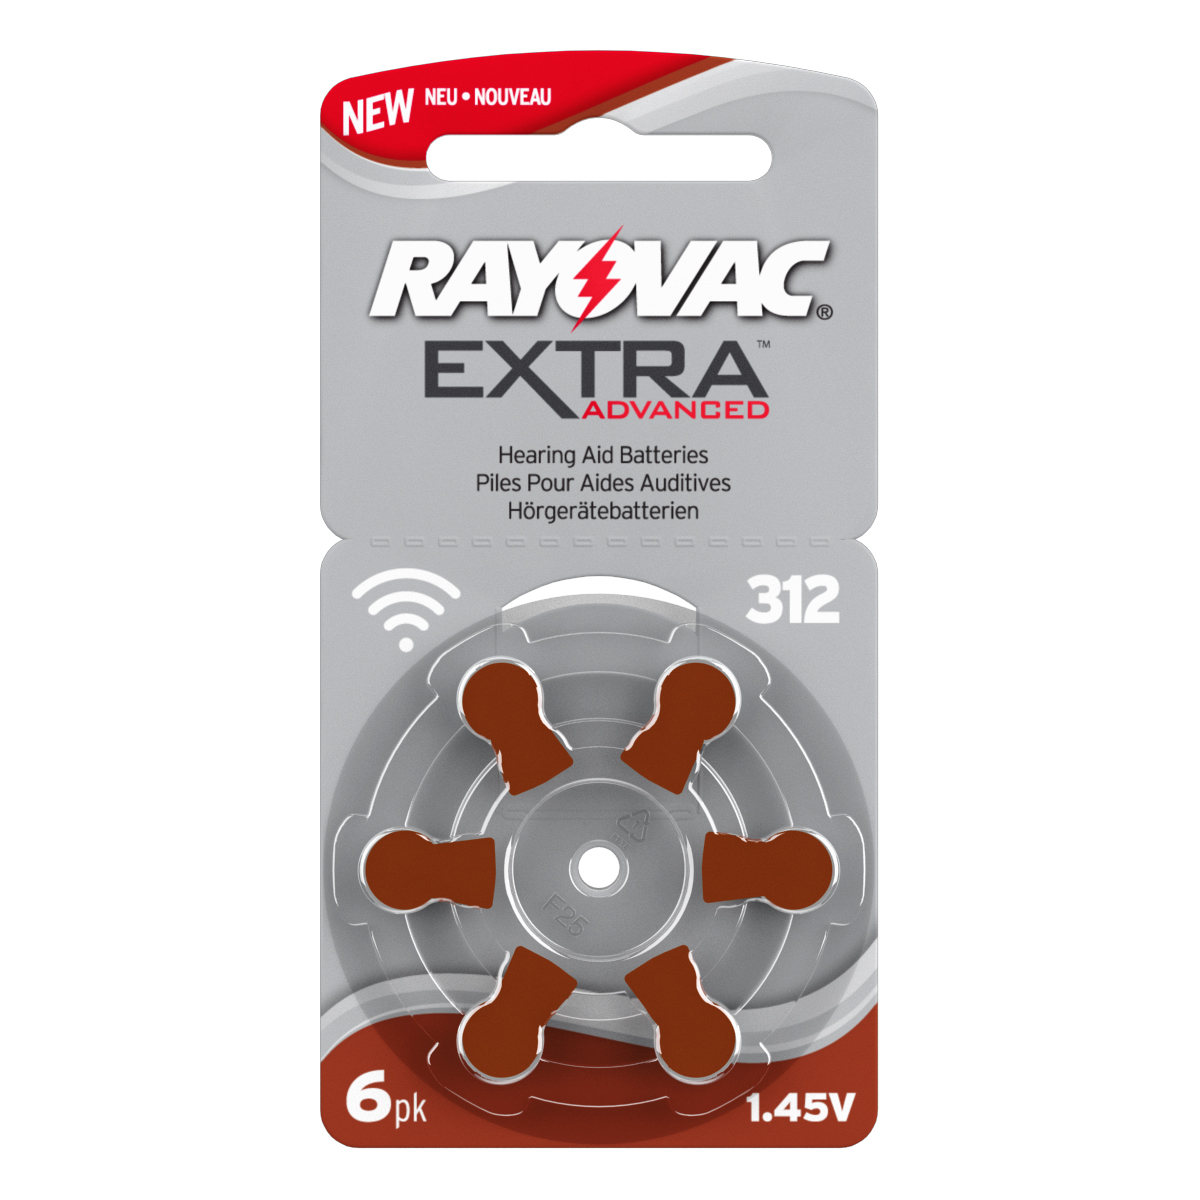 Rayovac Extra Advanced 60 pack Size 312